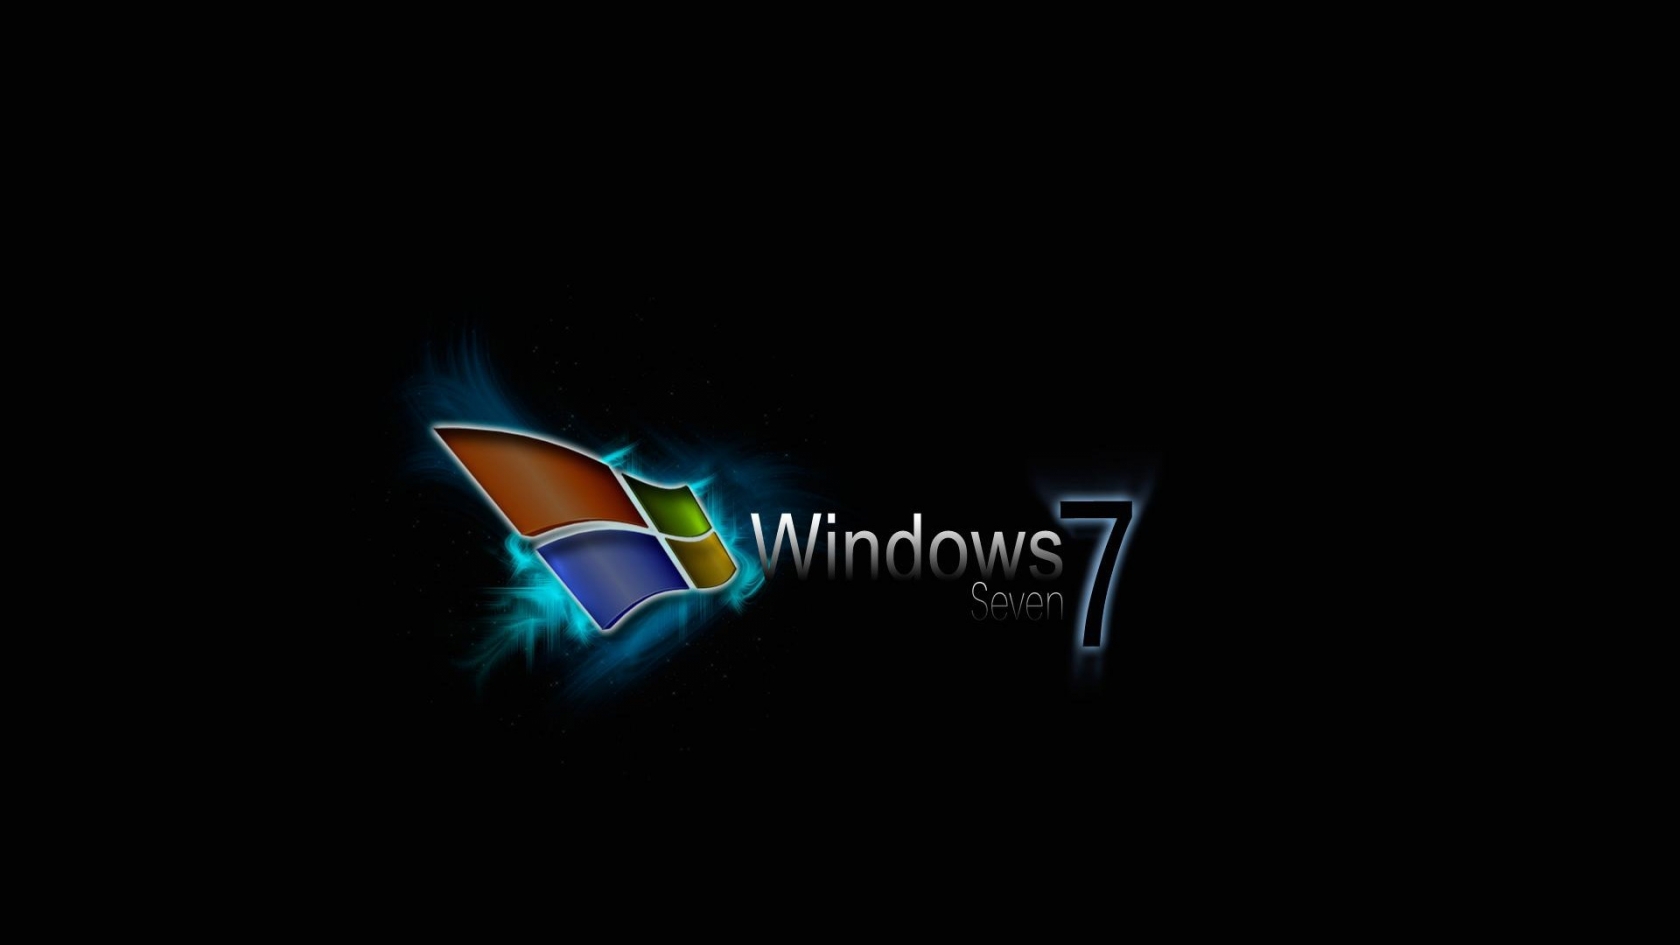 Best Windows 7 for 1680 x 945 HDTV resolution